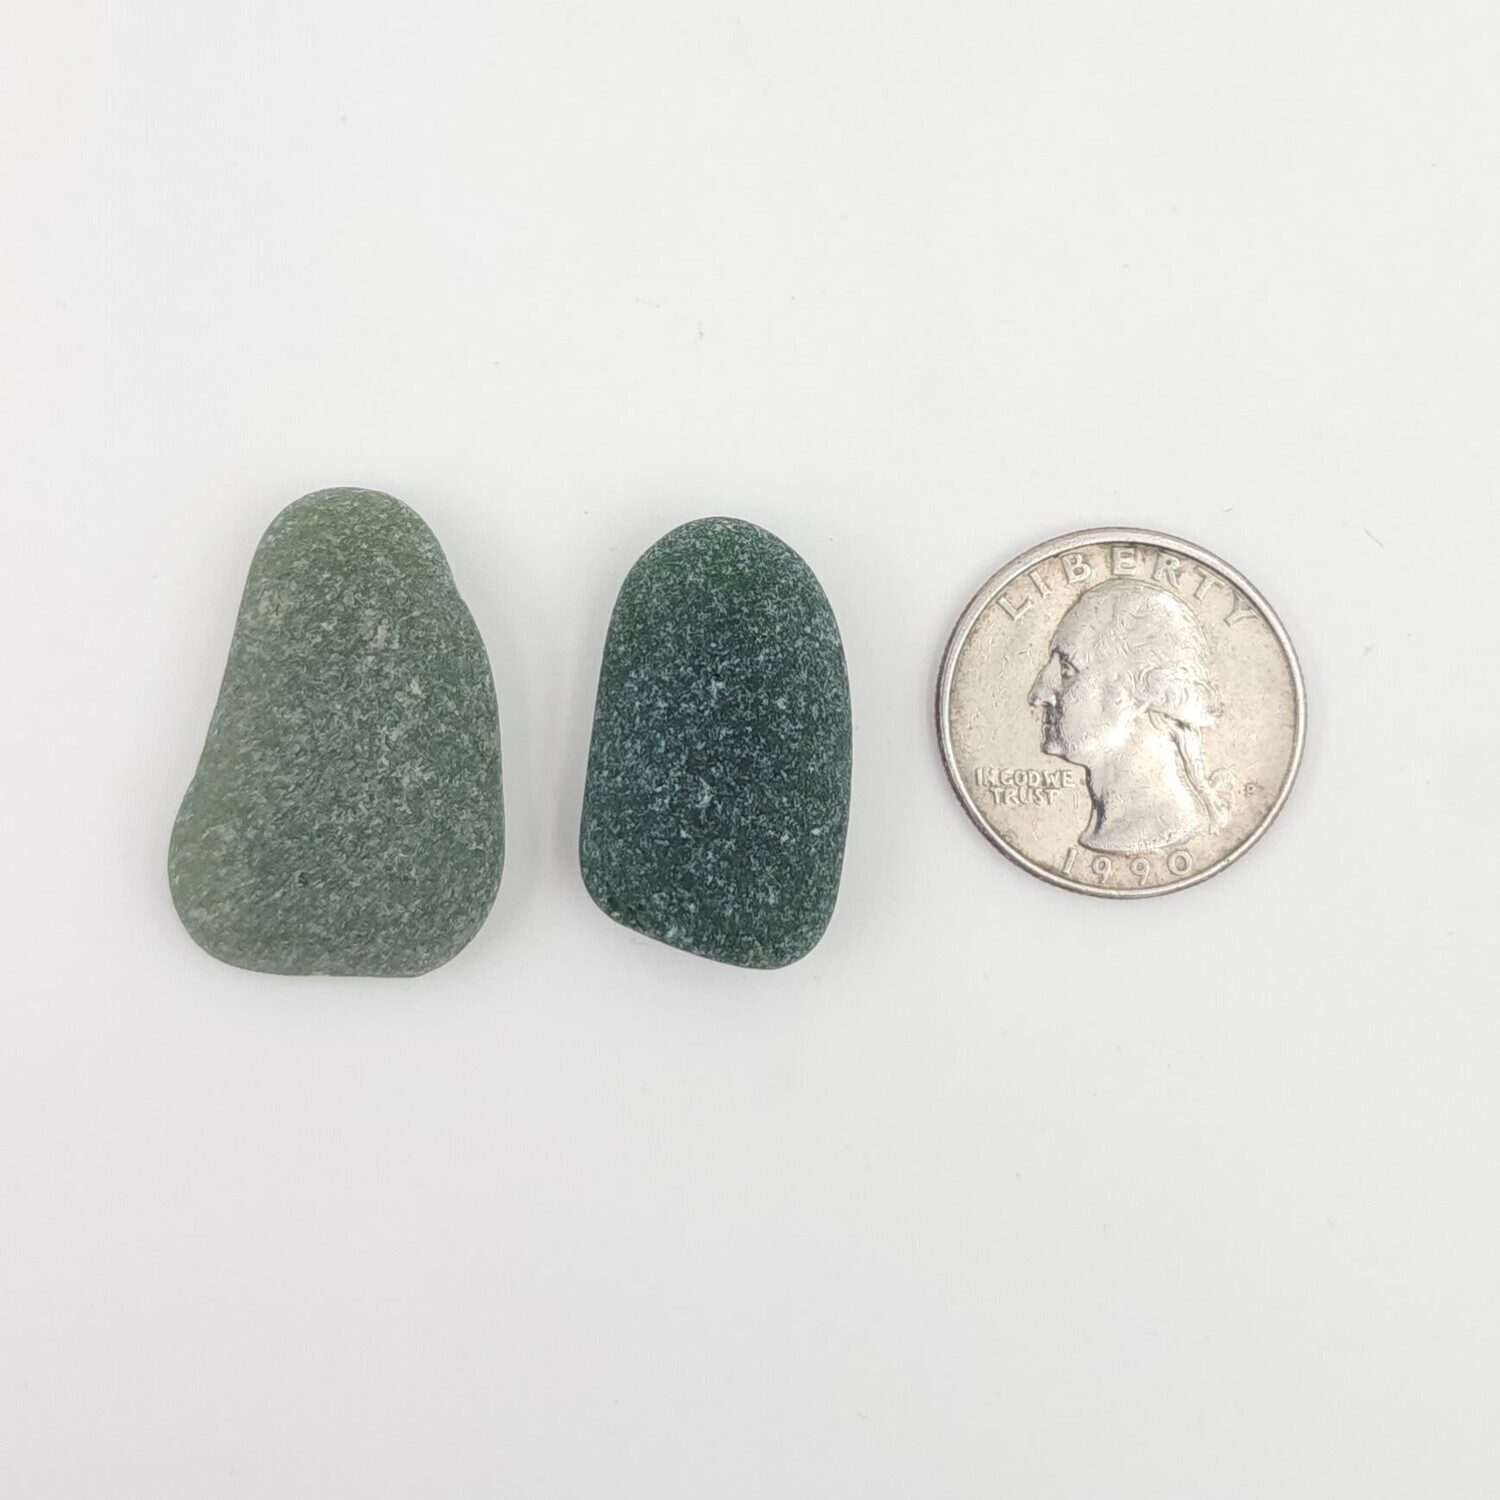 Genuine Loose Shades of Green Lake Erie Beach Glass - Lot 15